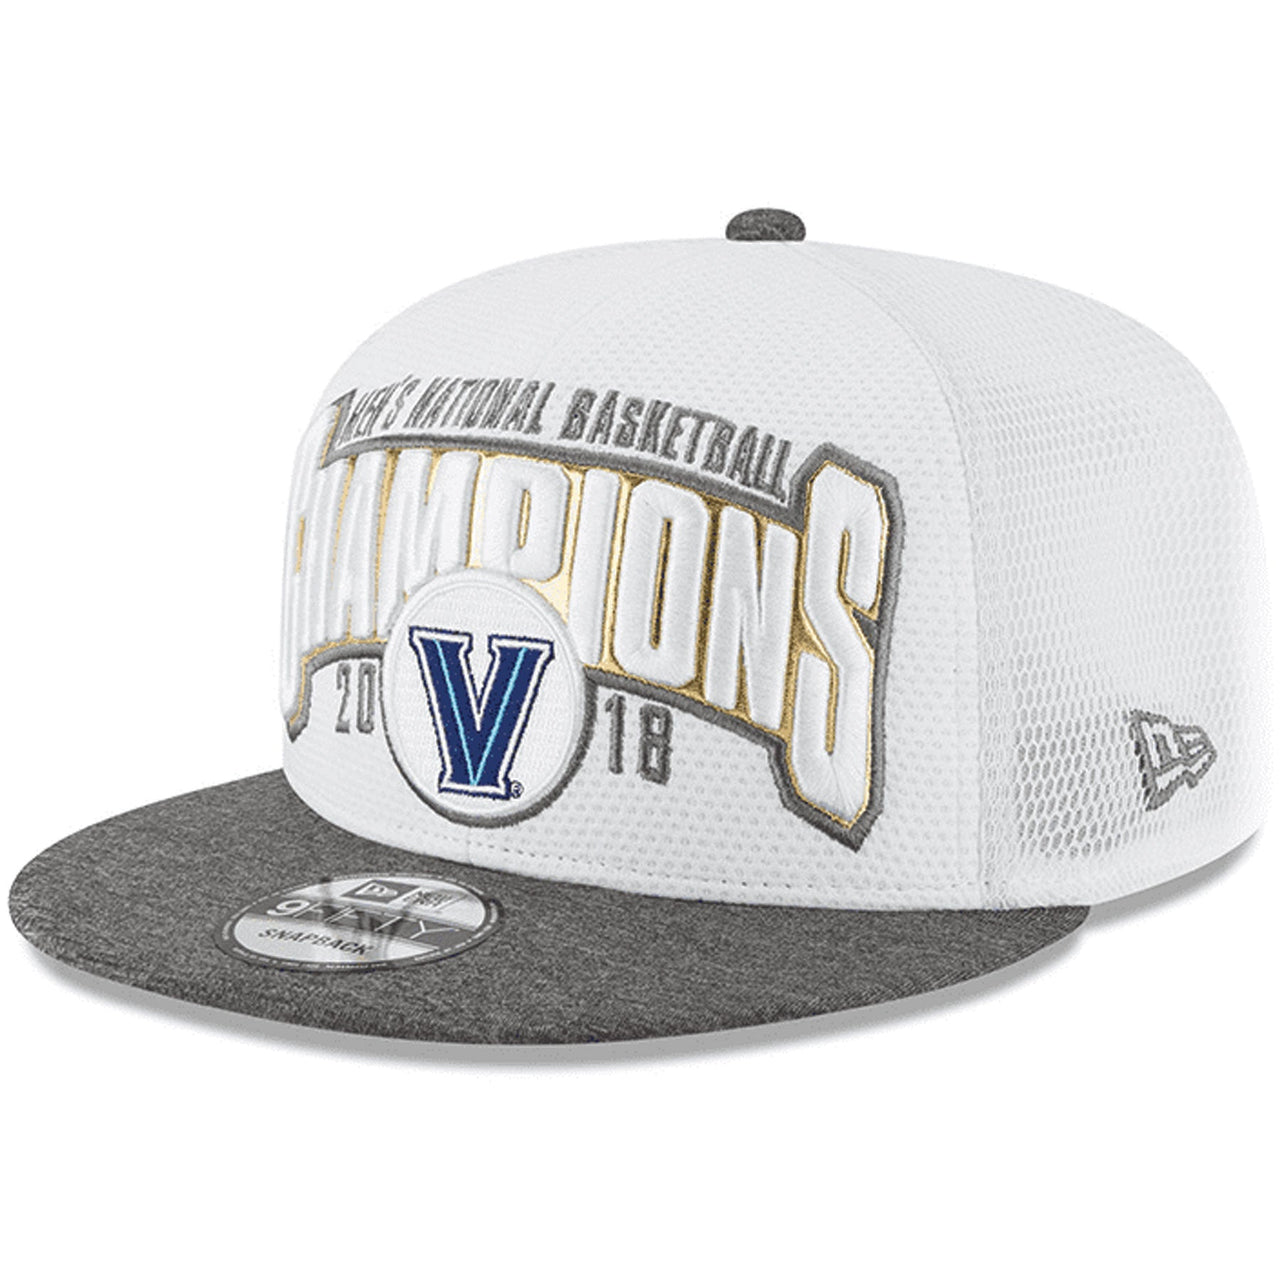 Villanova Wildcats 2018 NCAA Championship Snapback Hat